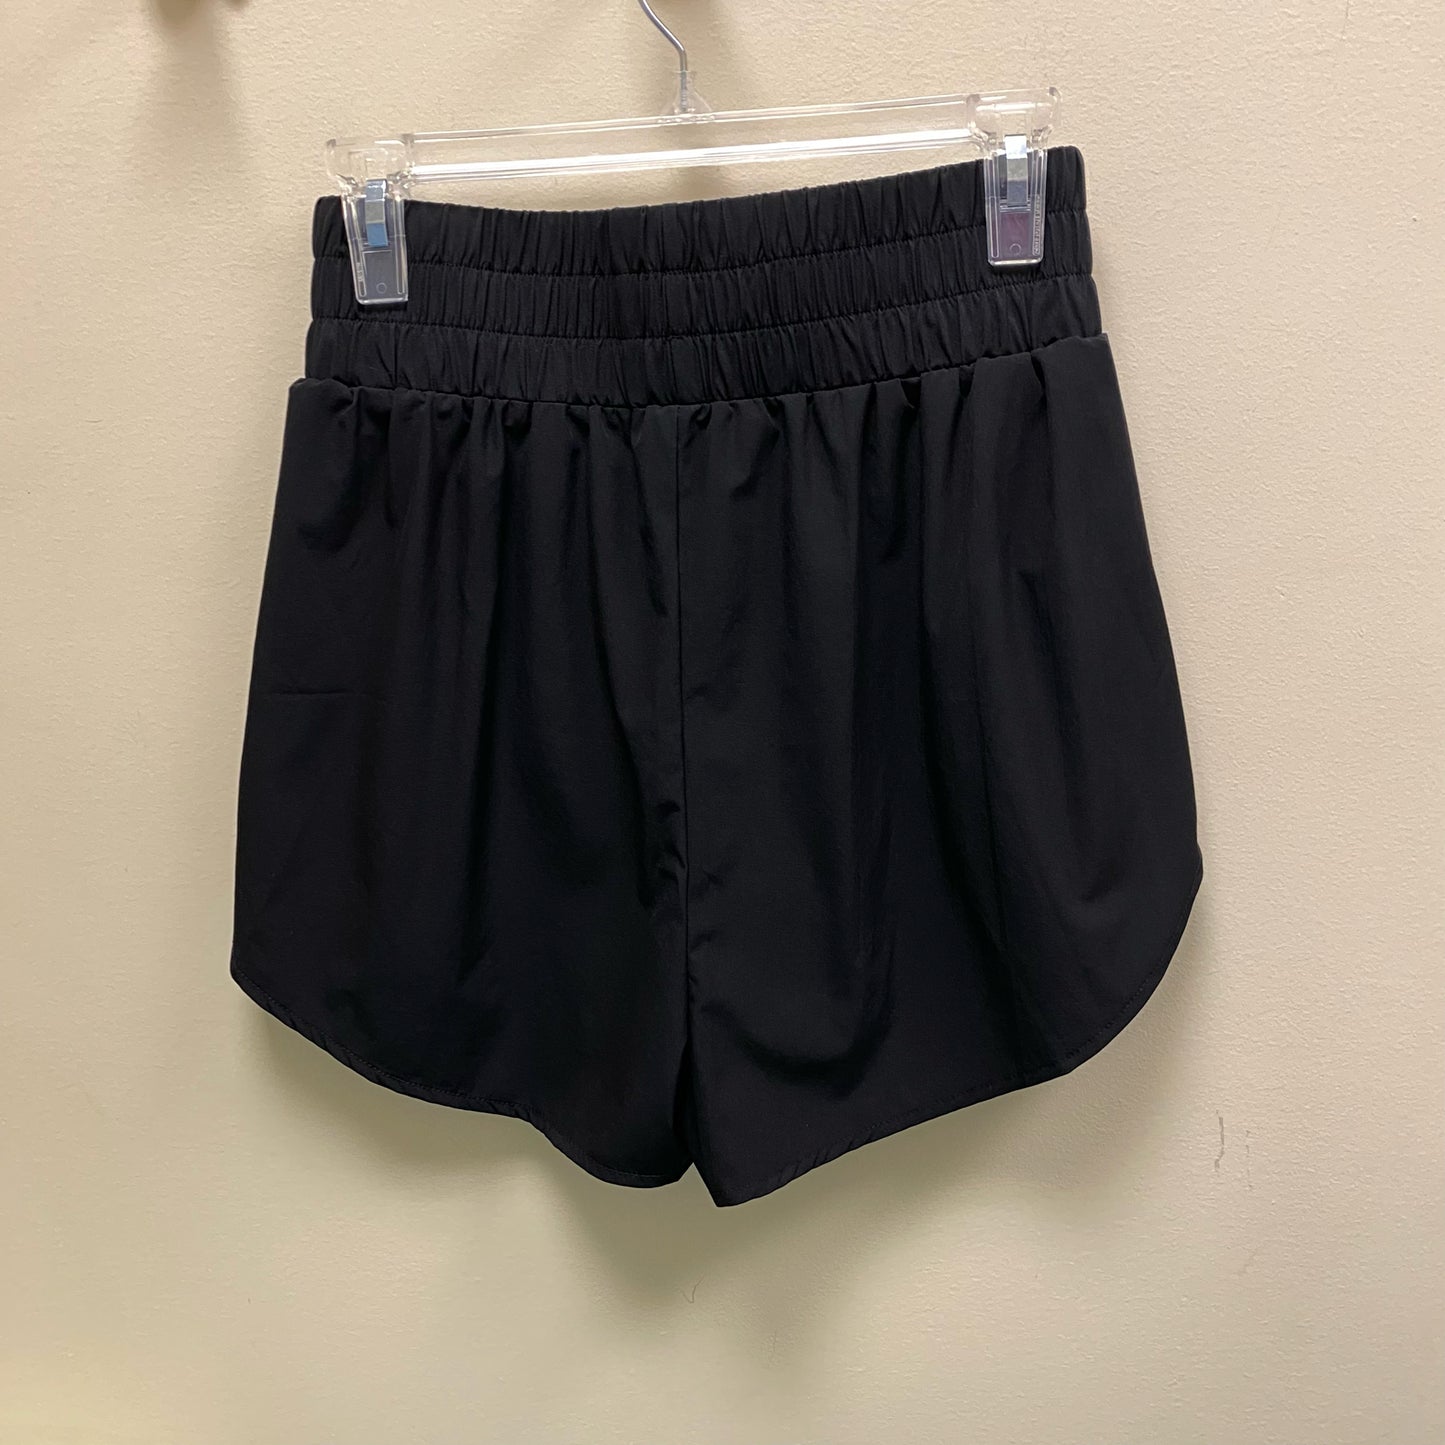 Shein Shorts - Size Medium